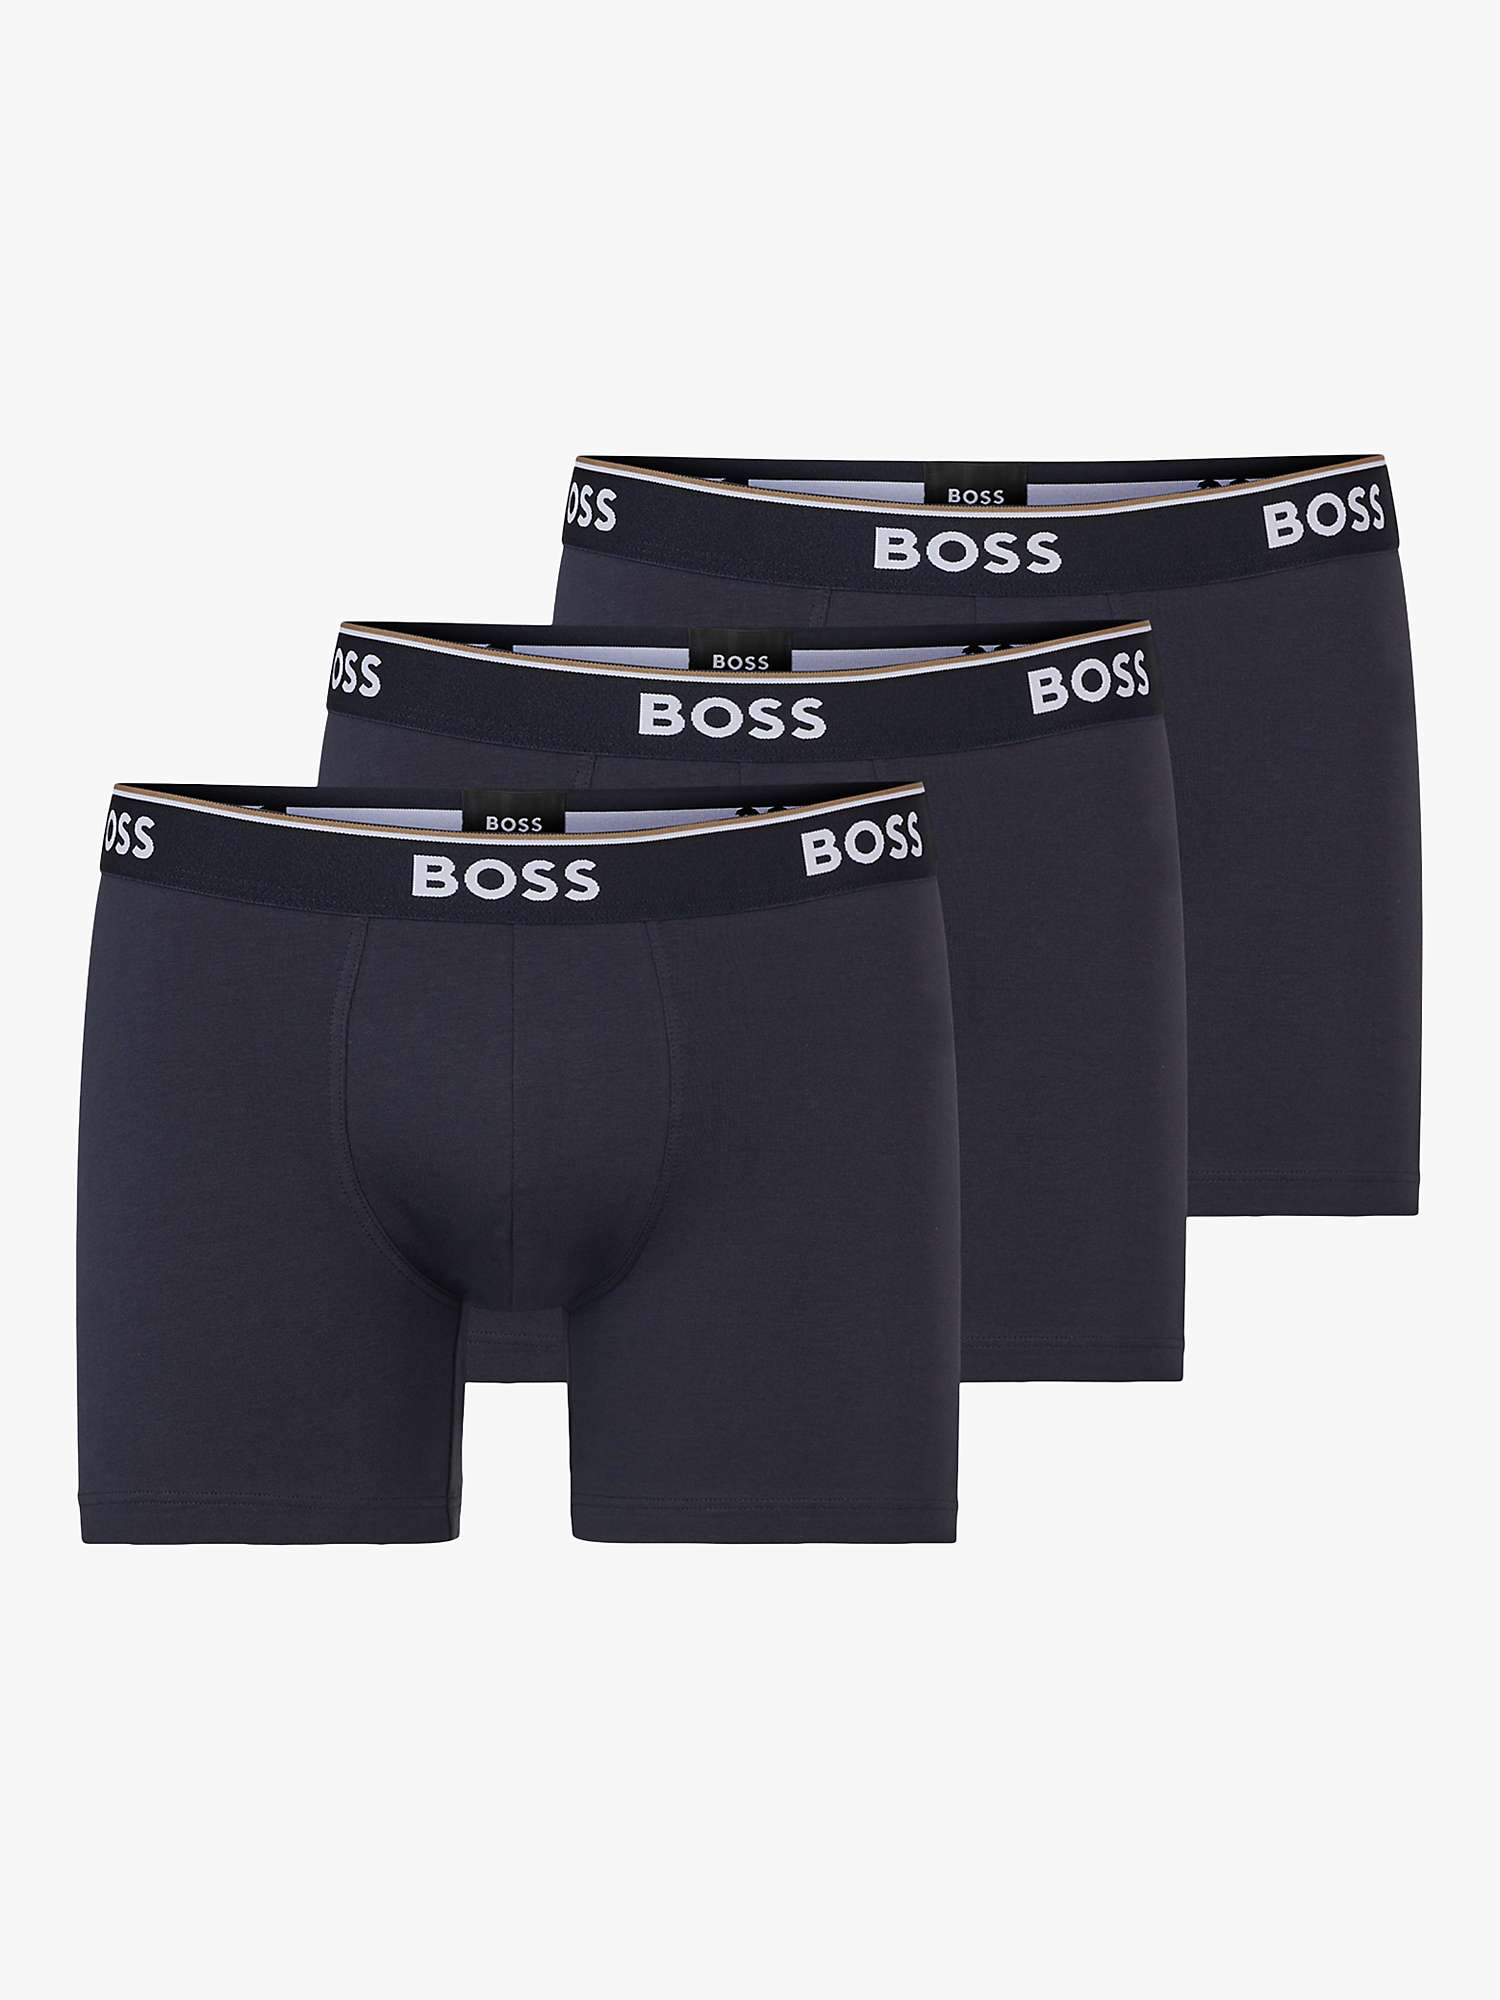 Buy BOSS Power Cotton Logo Waistband Trunks, Pack of 3 Online at johnlewis.com